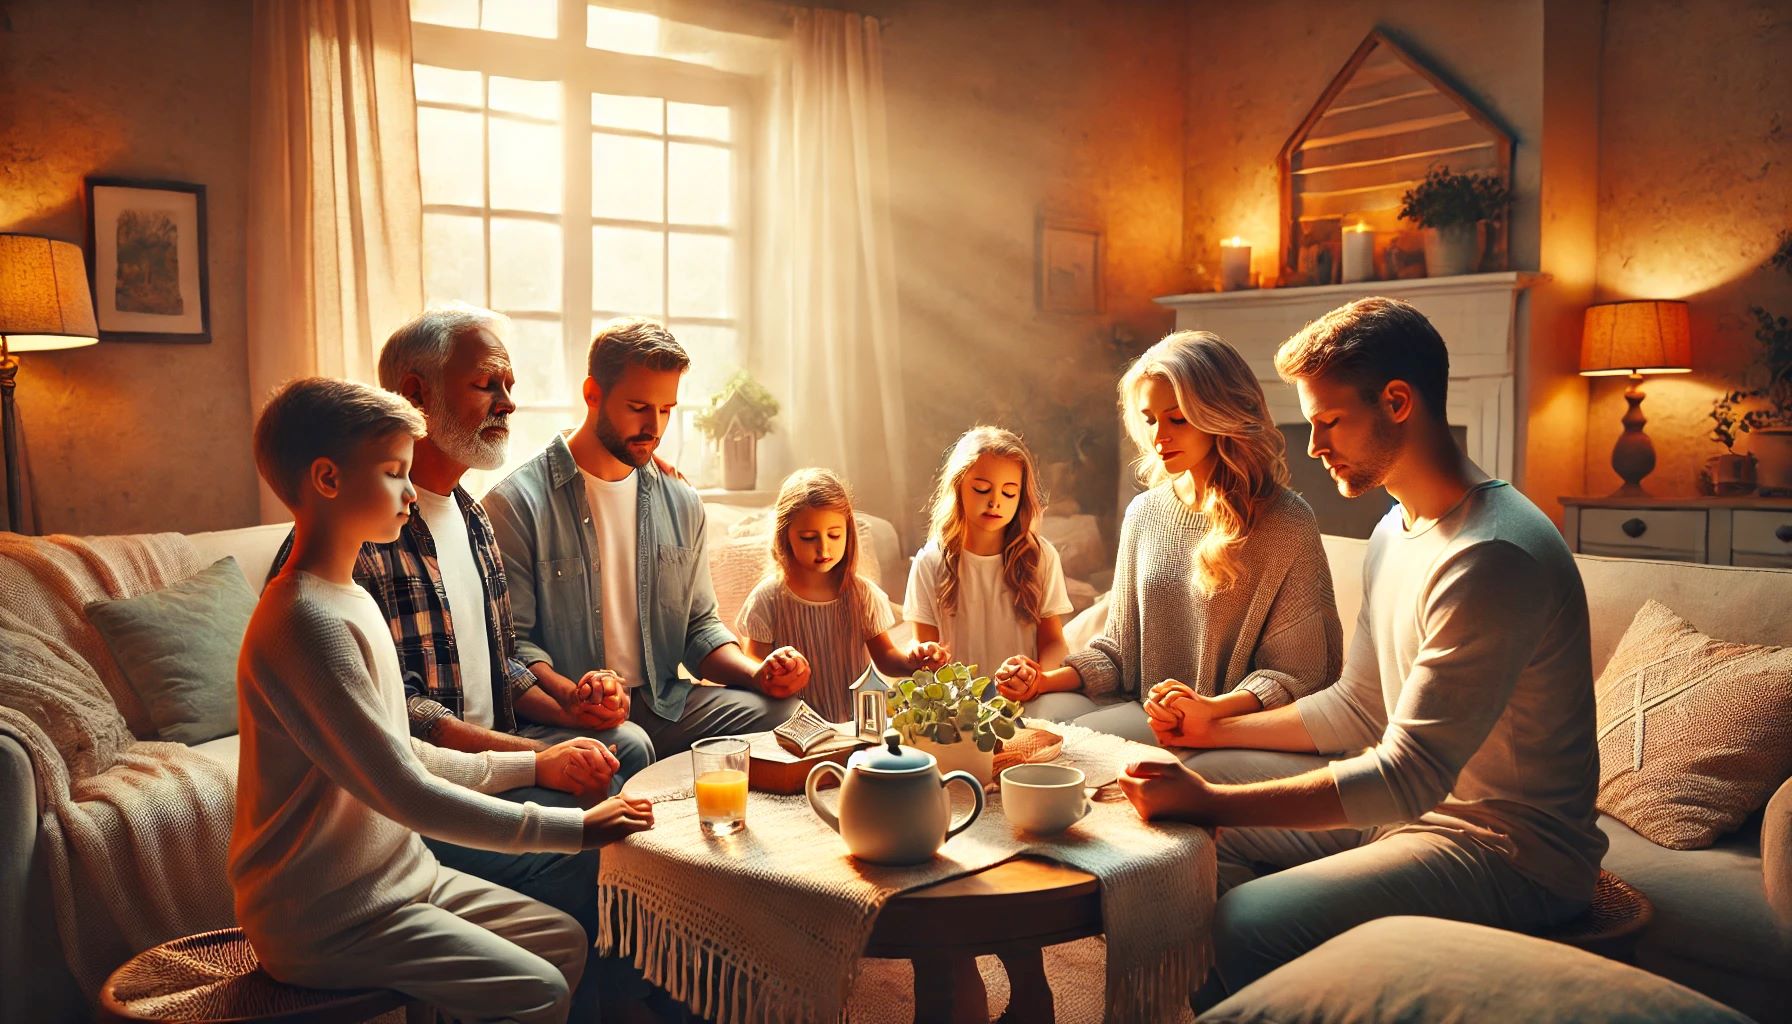 15 Family Morning Prayers